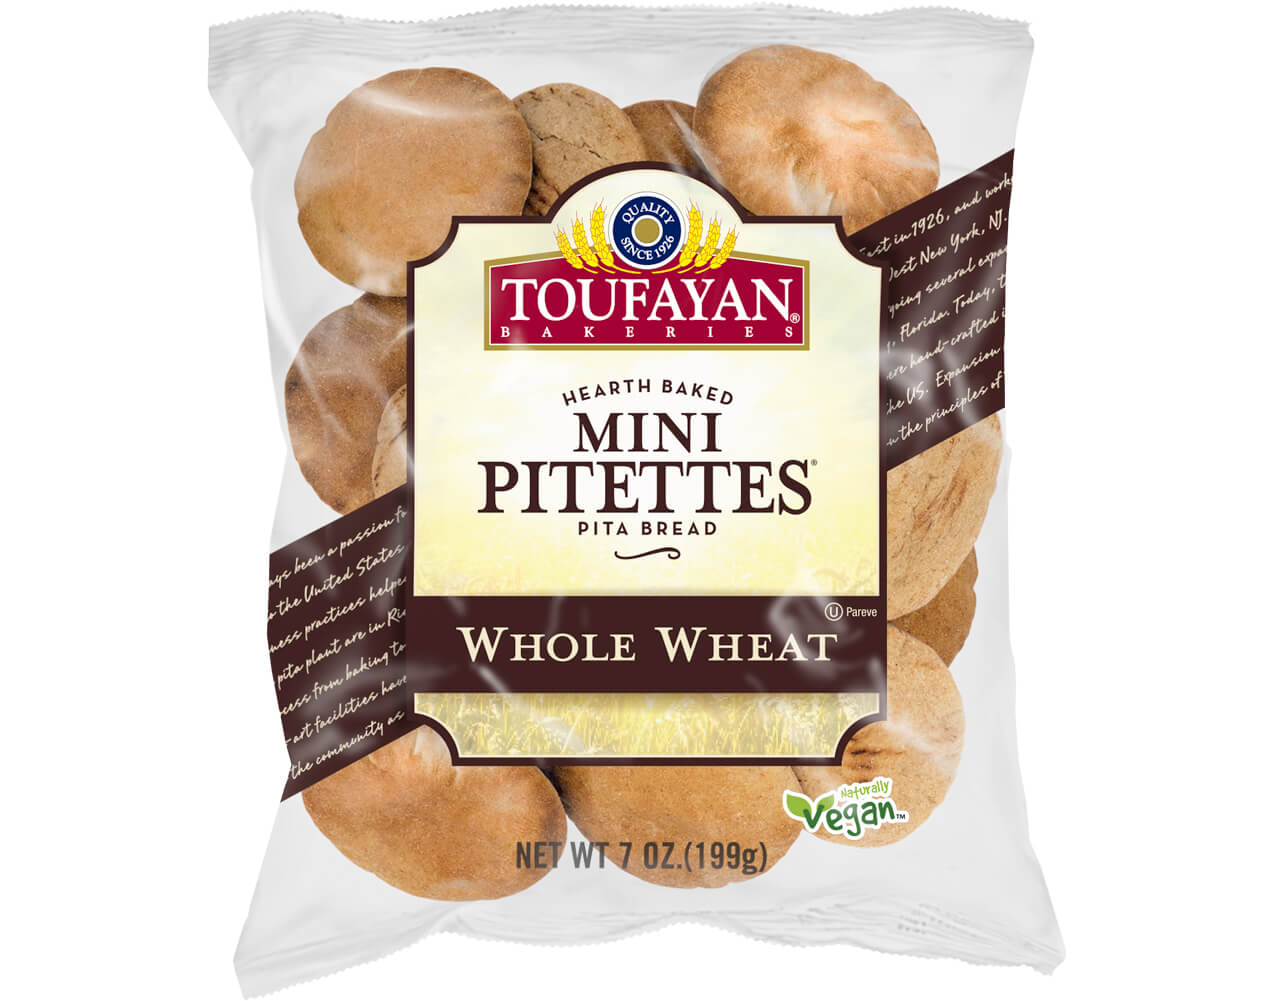 Mini Pitettes Whole Wheat